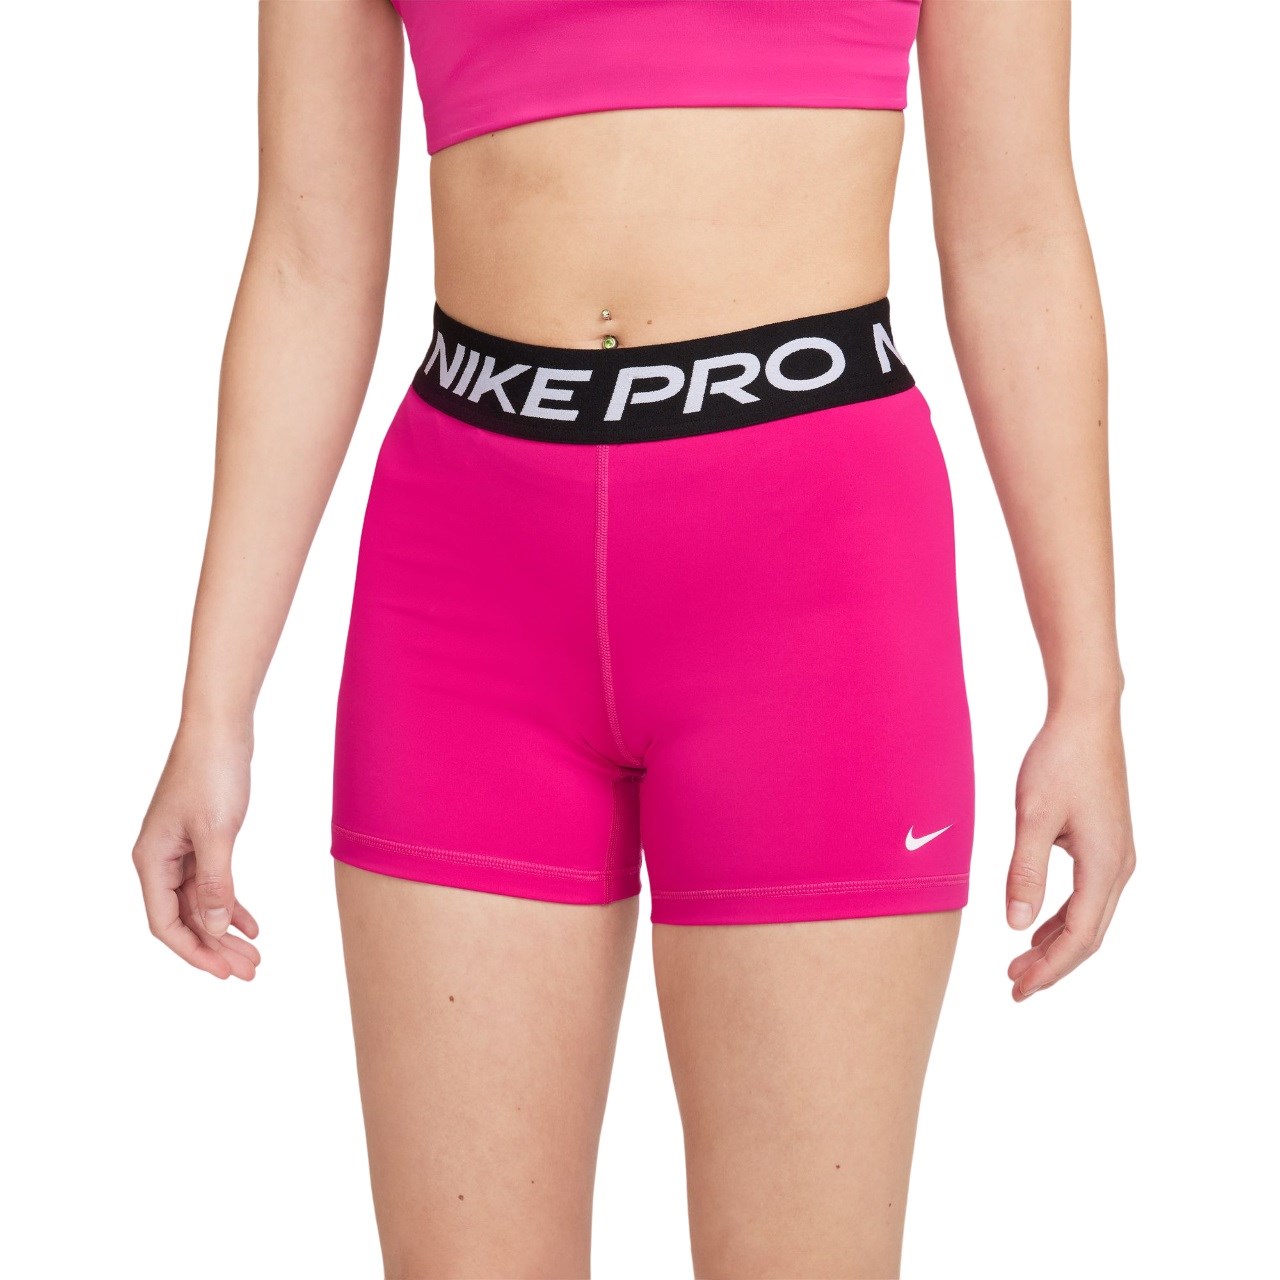 Nike Training Pro 5 Shorts in Black